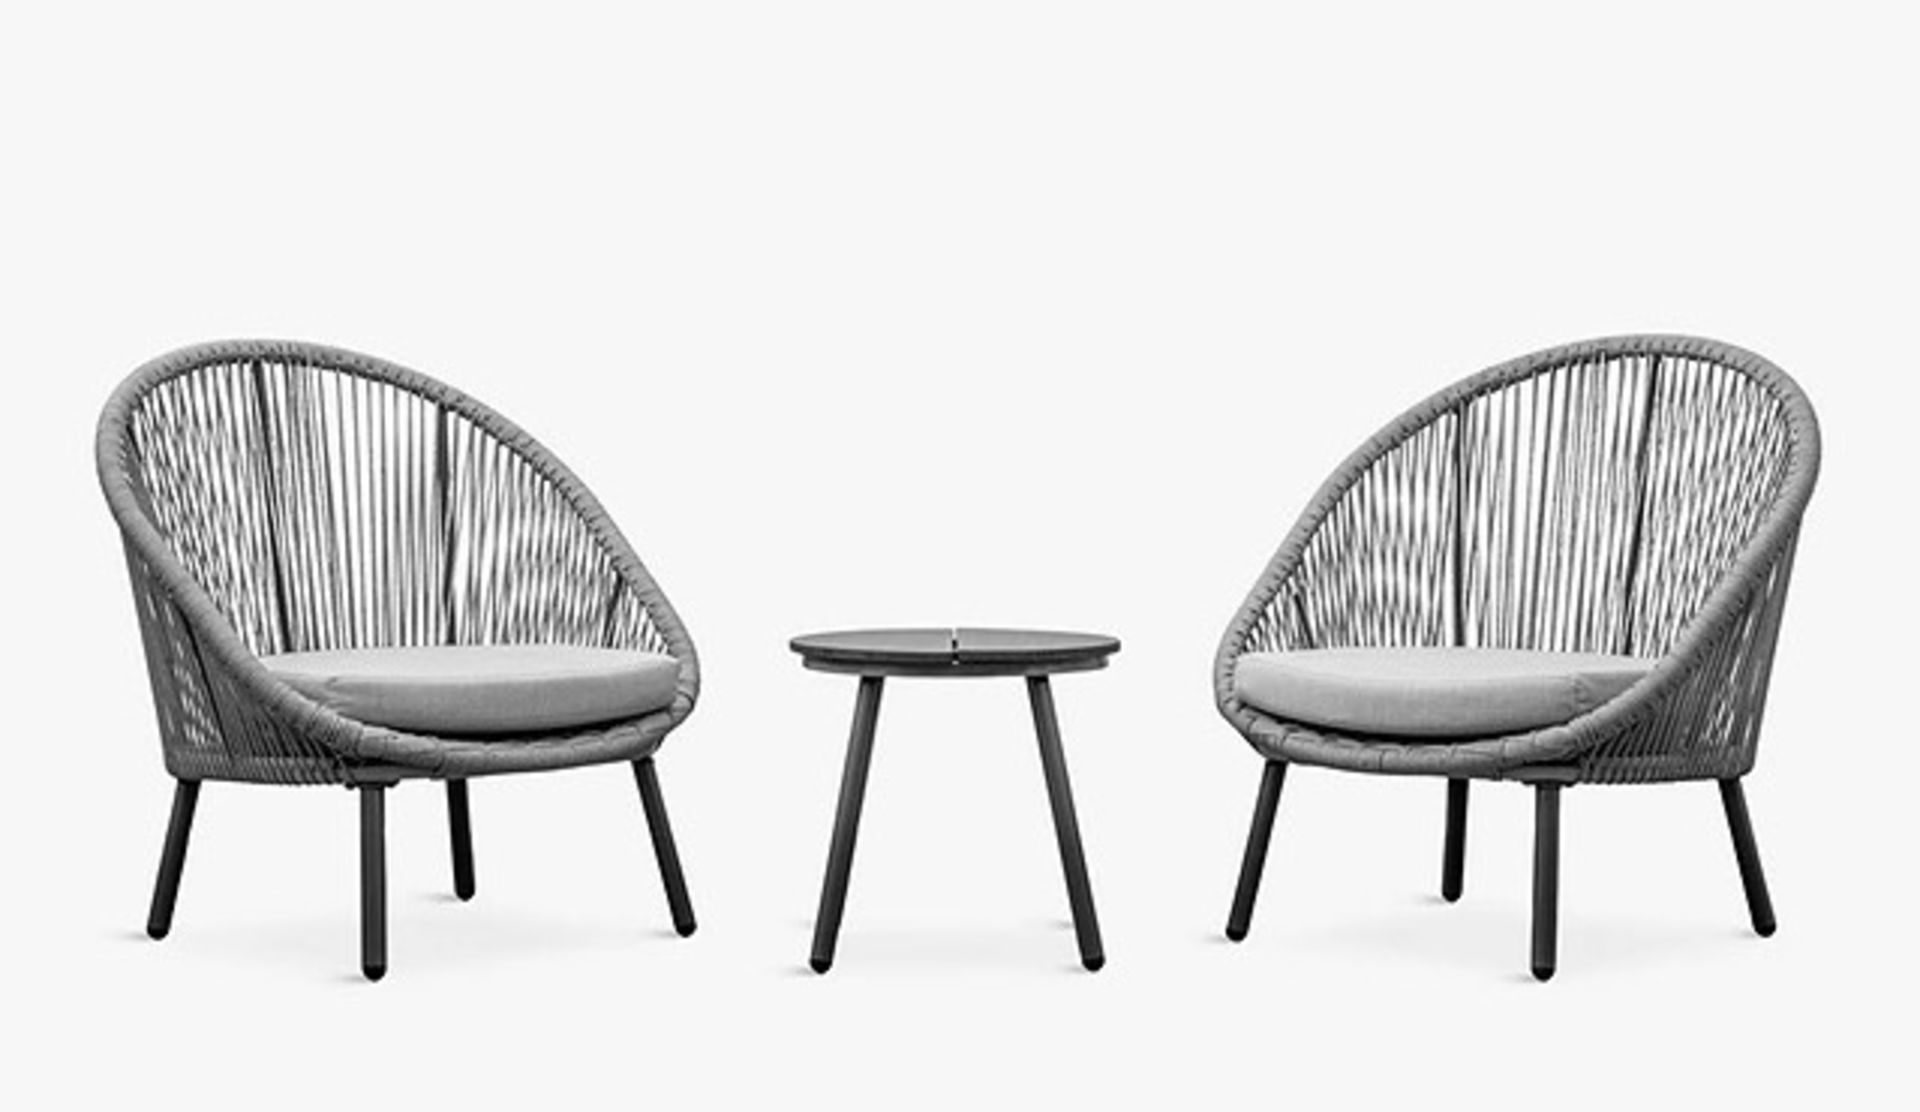 John Lewis Laira 2-Seater Garden Bistro Table & Chairs Set, Sage - PRICED £900 - Image 4 of 4